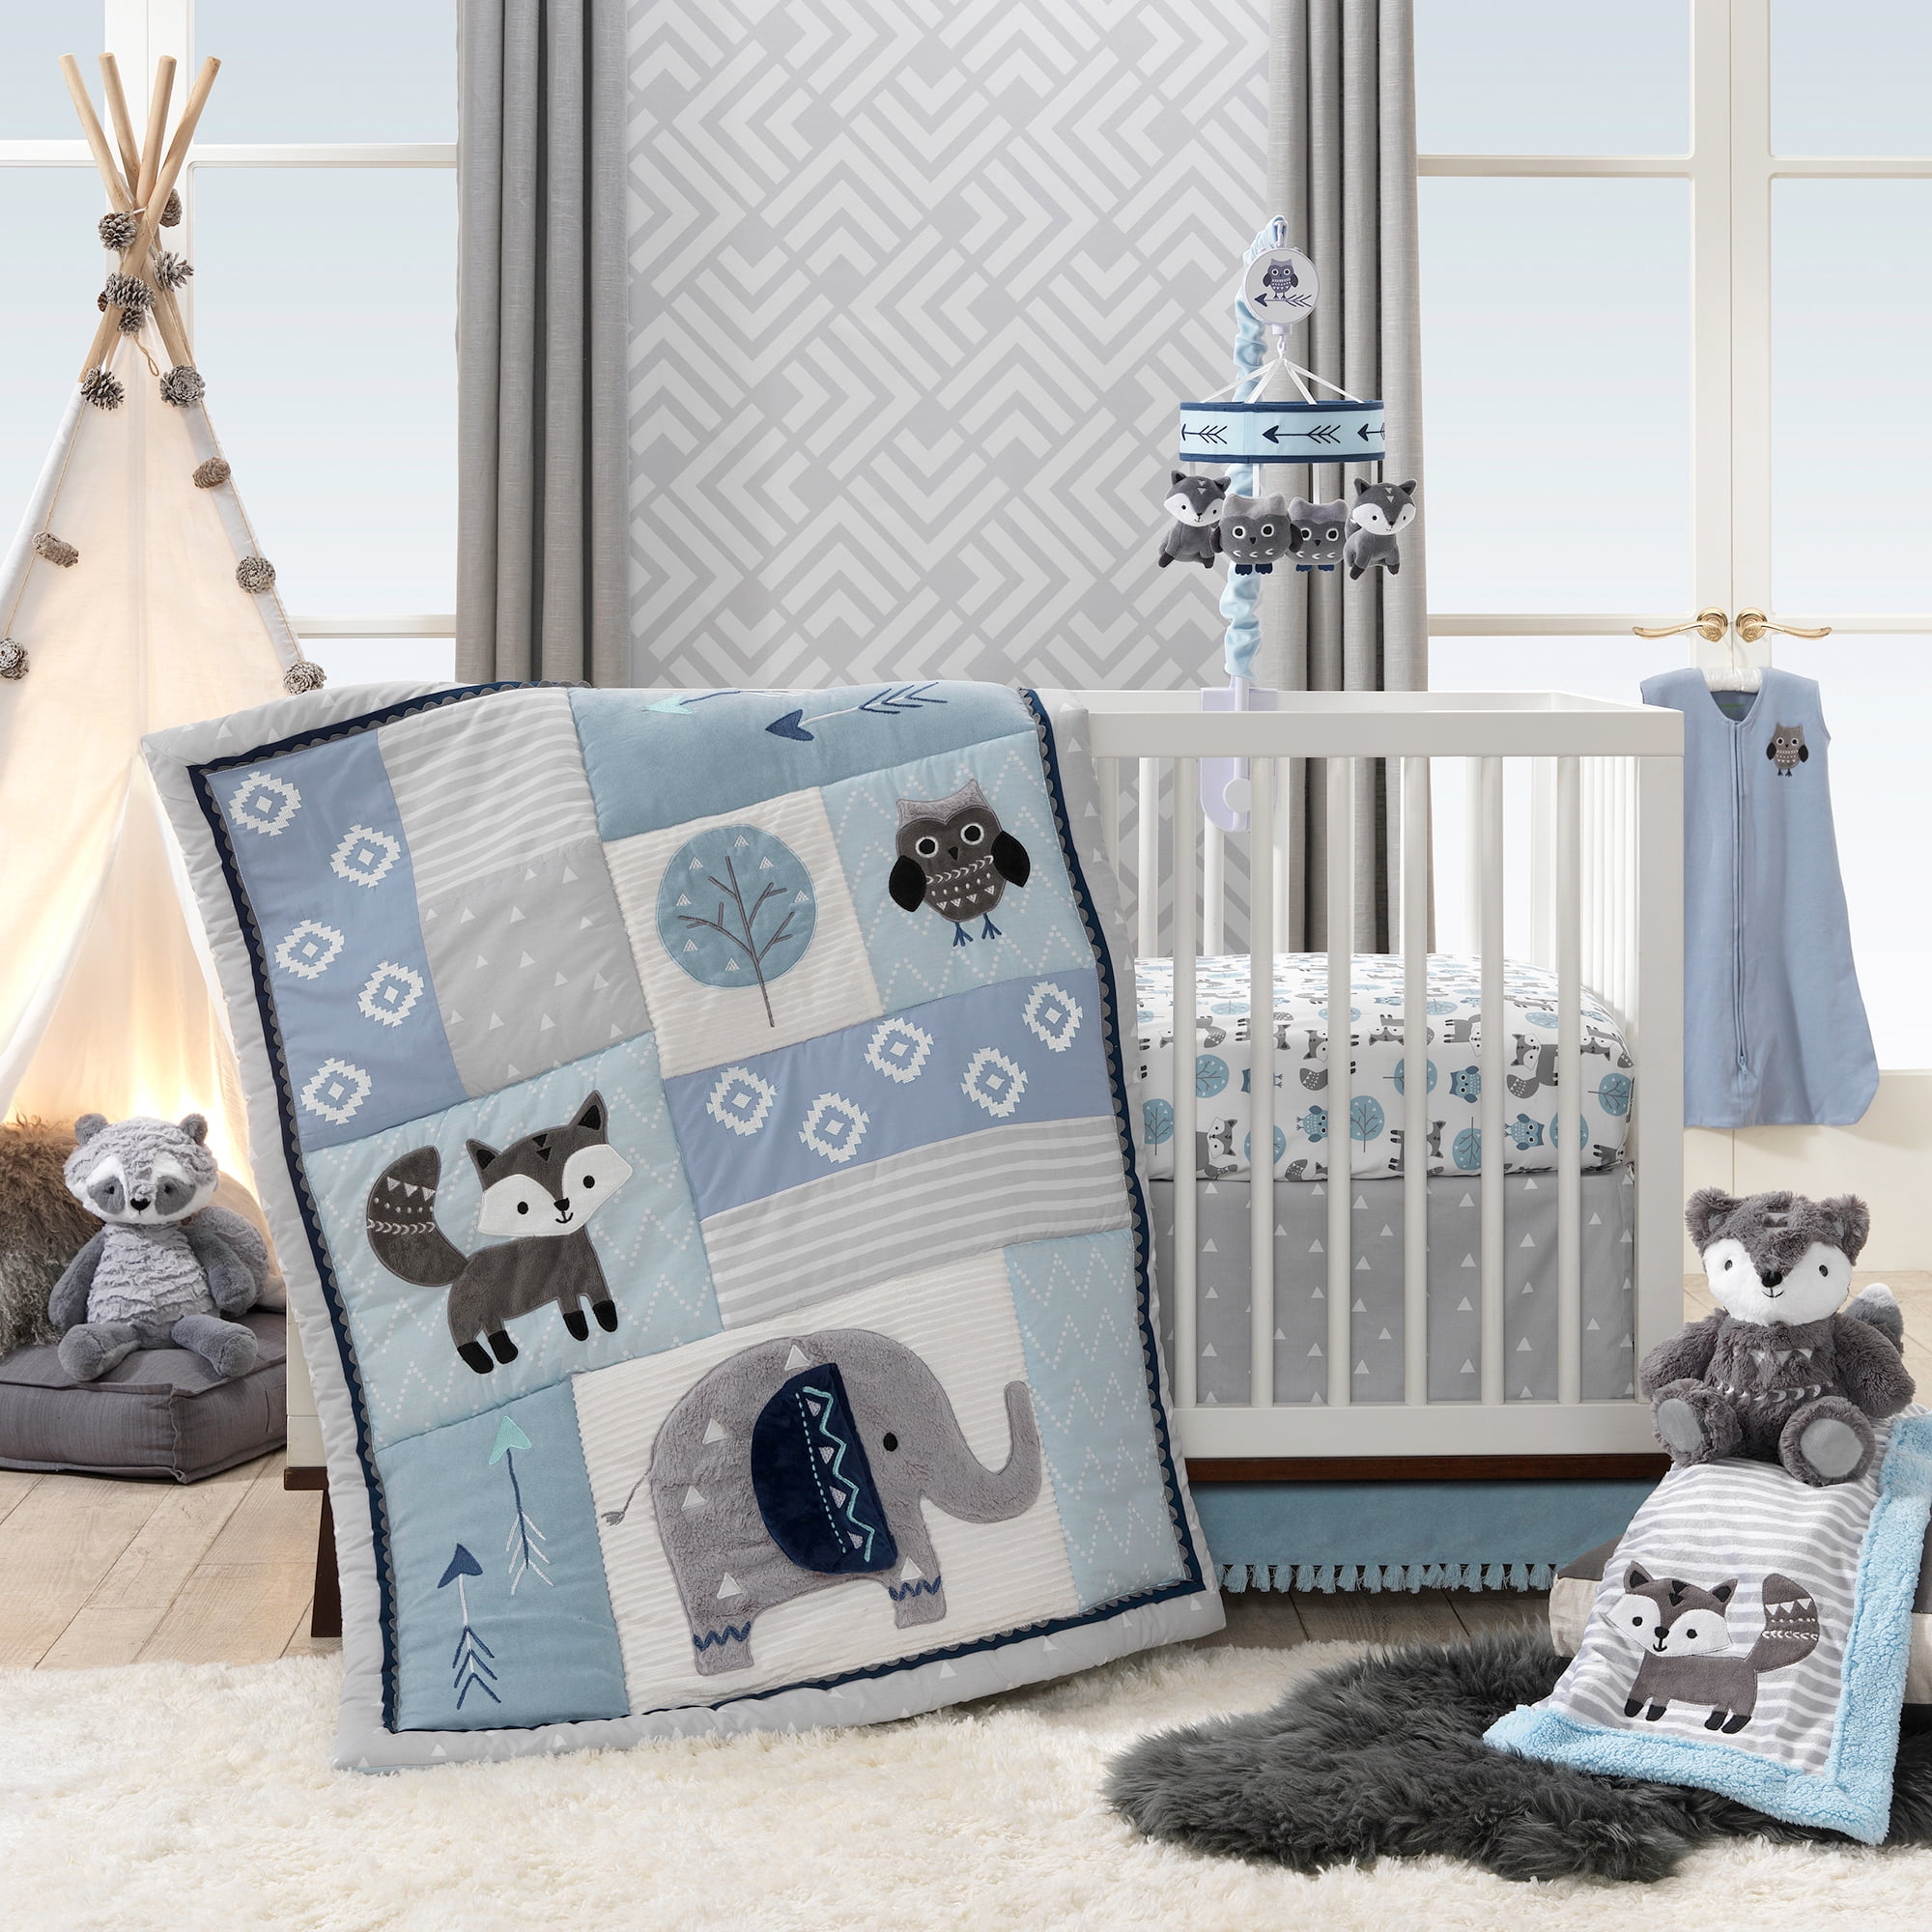 Lambs & Ivy Stay Wild 4-Piece Crib Bedding Set - Blue, Gray, White, Animals